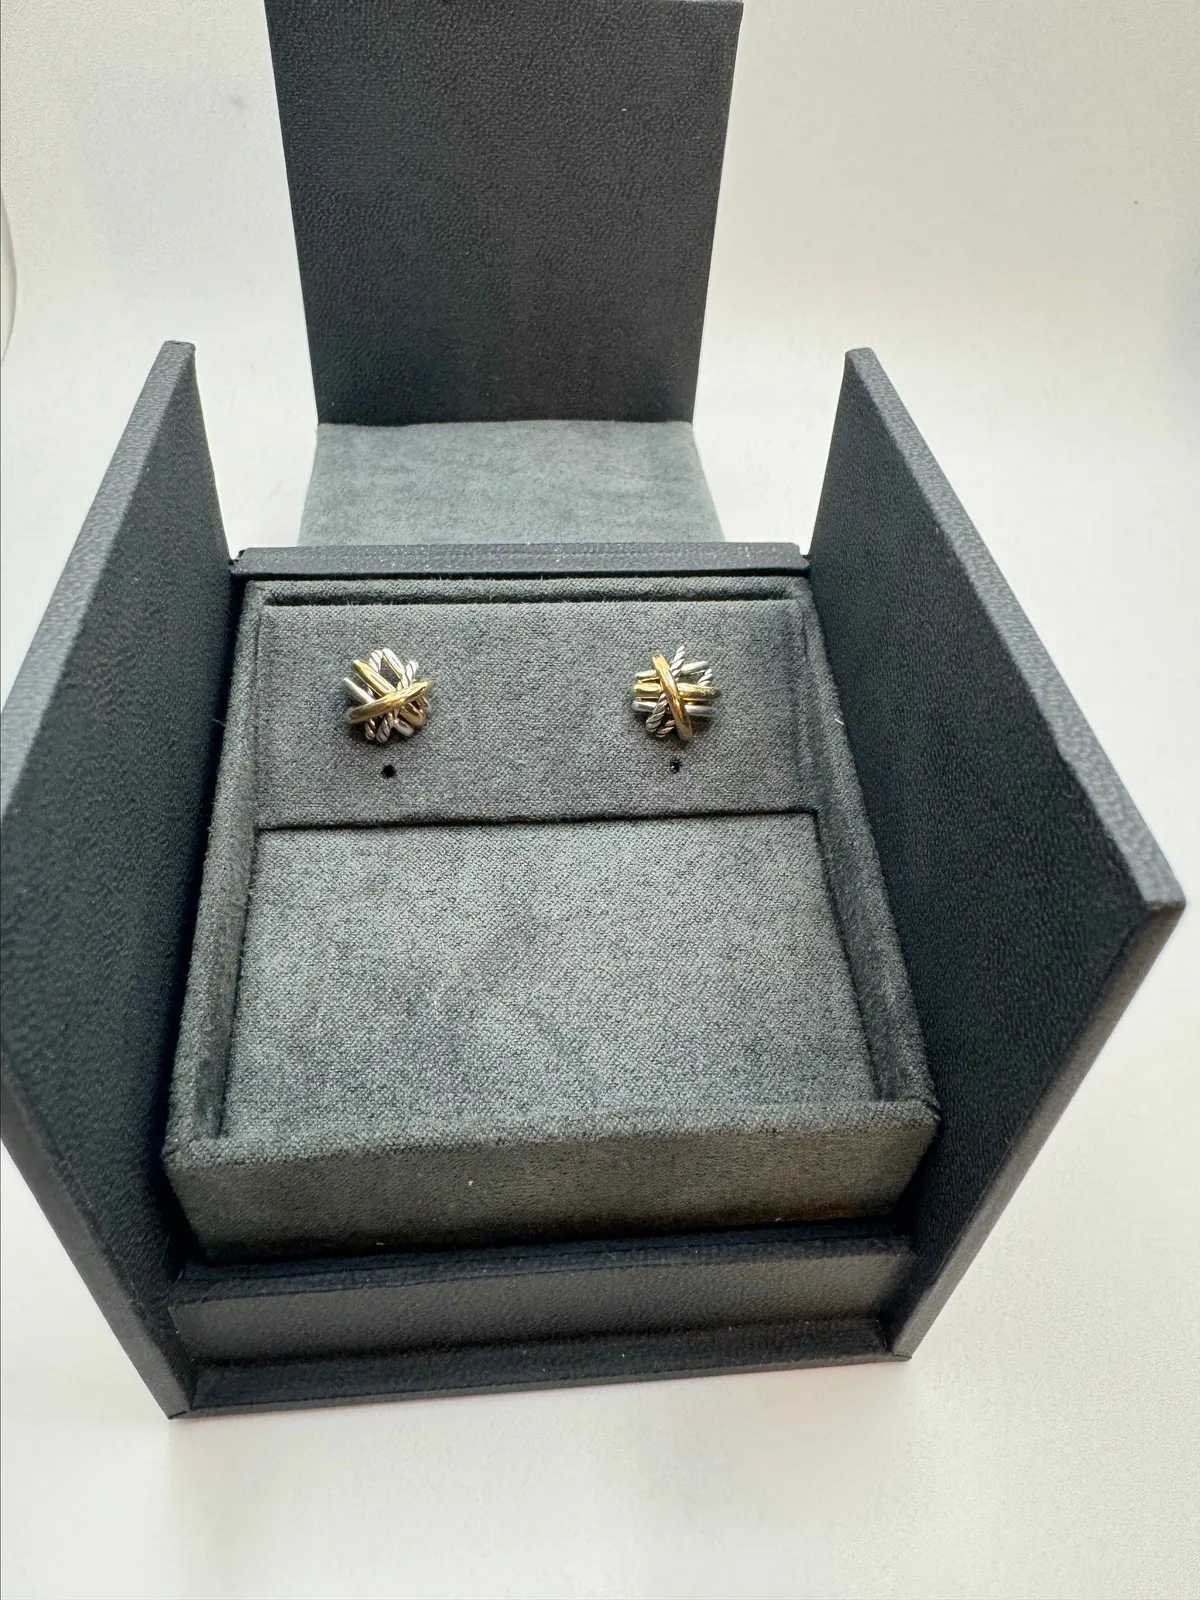 David yurman crossover stud earrings sterling silver 18k gold · Whatnot ...